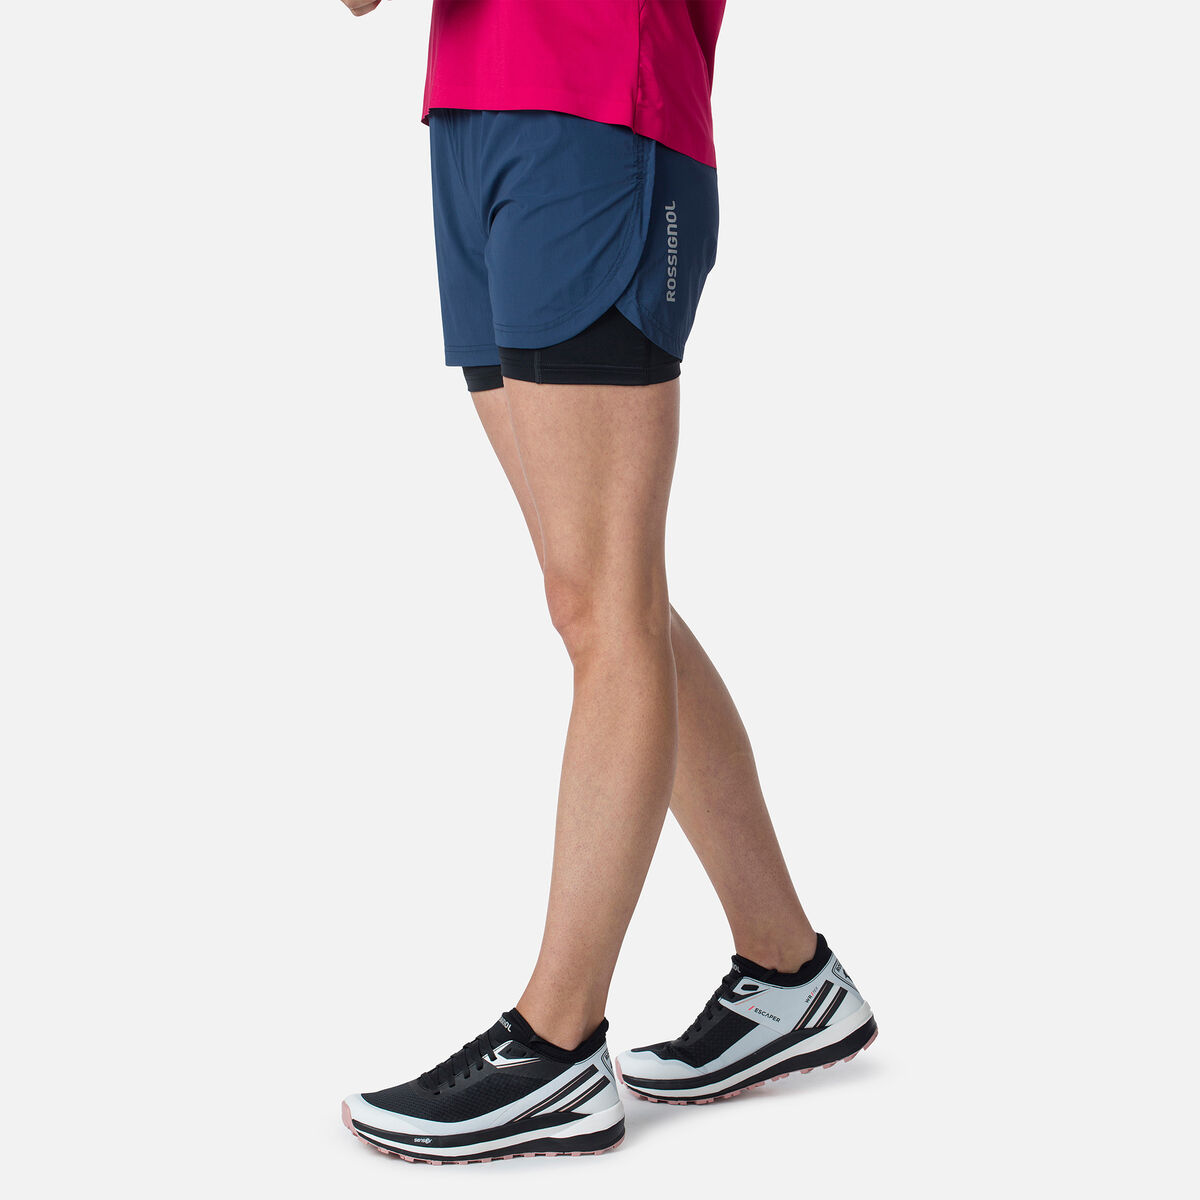 Women's Hiking, Running & Gym Shorts